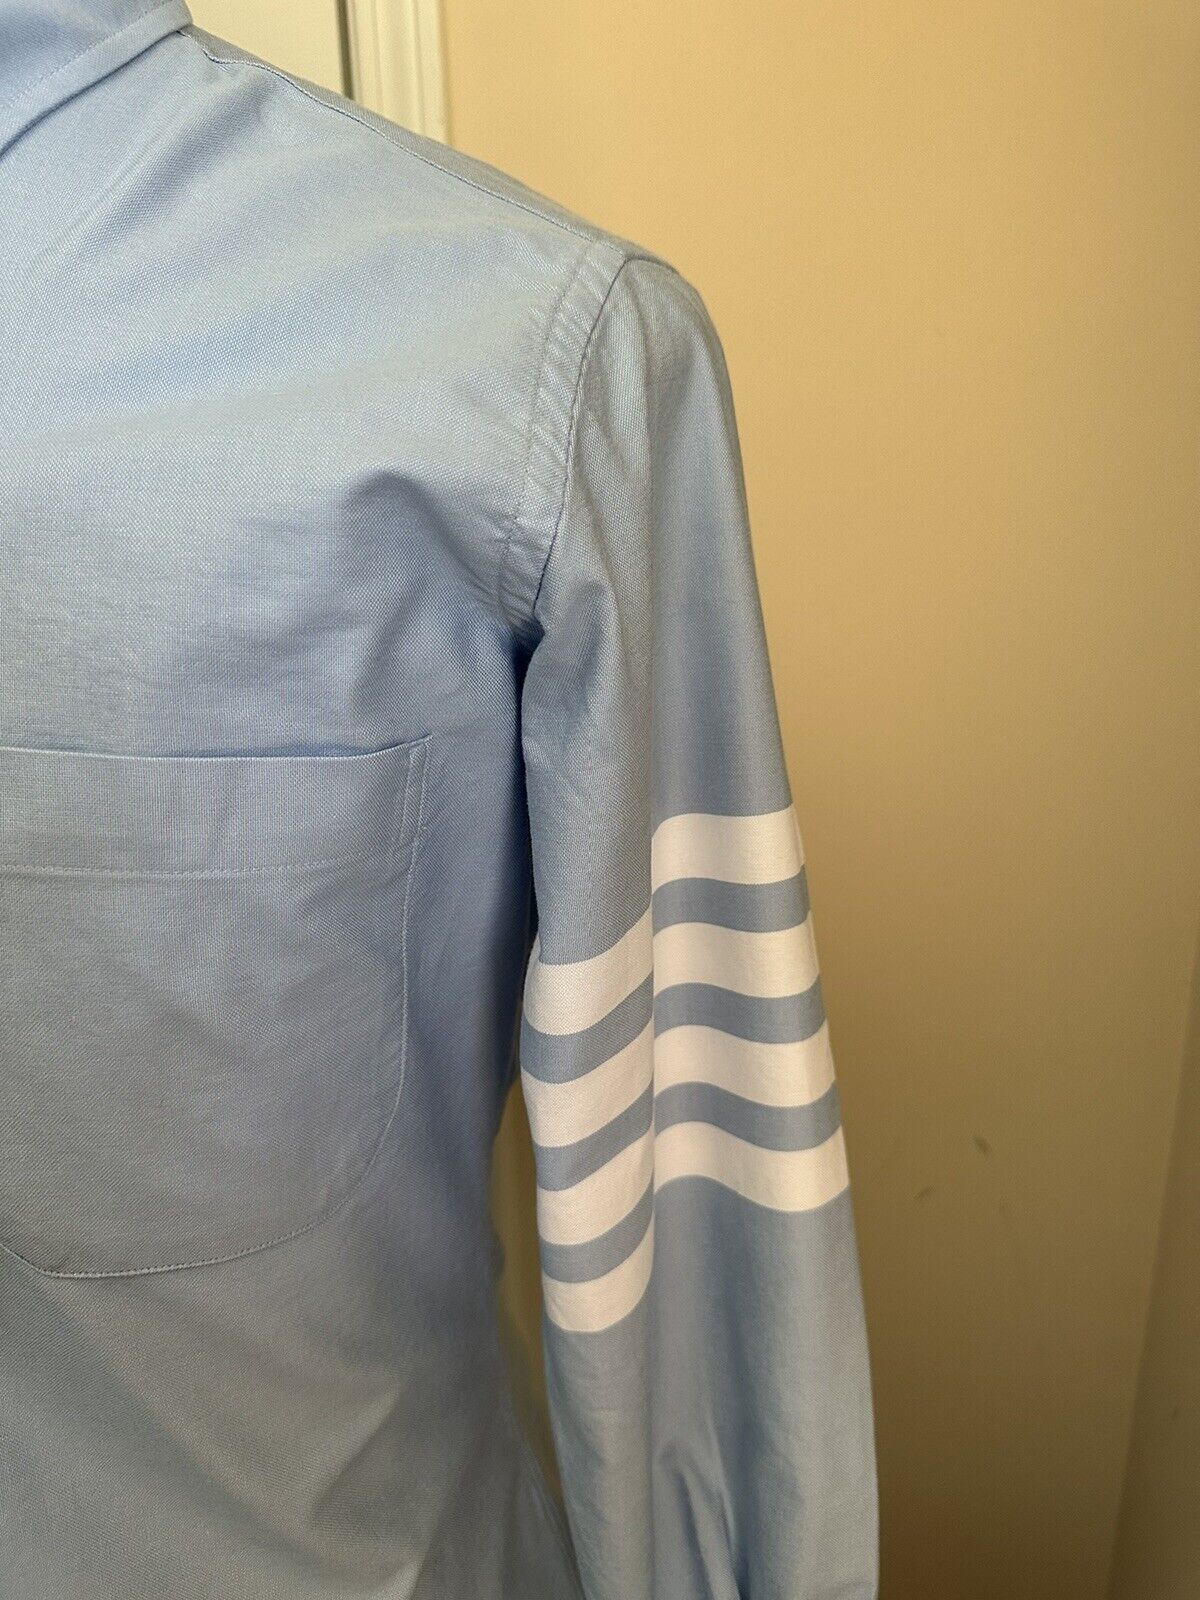 NWT Thom Browne Men's 4-Bar Striped Long Sleeve Shirt Blue Size 2 ( M )